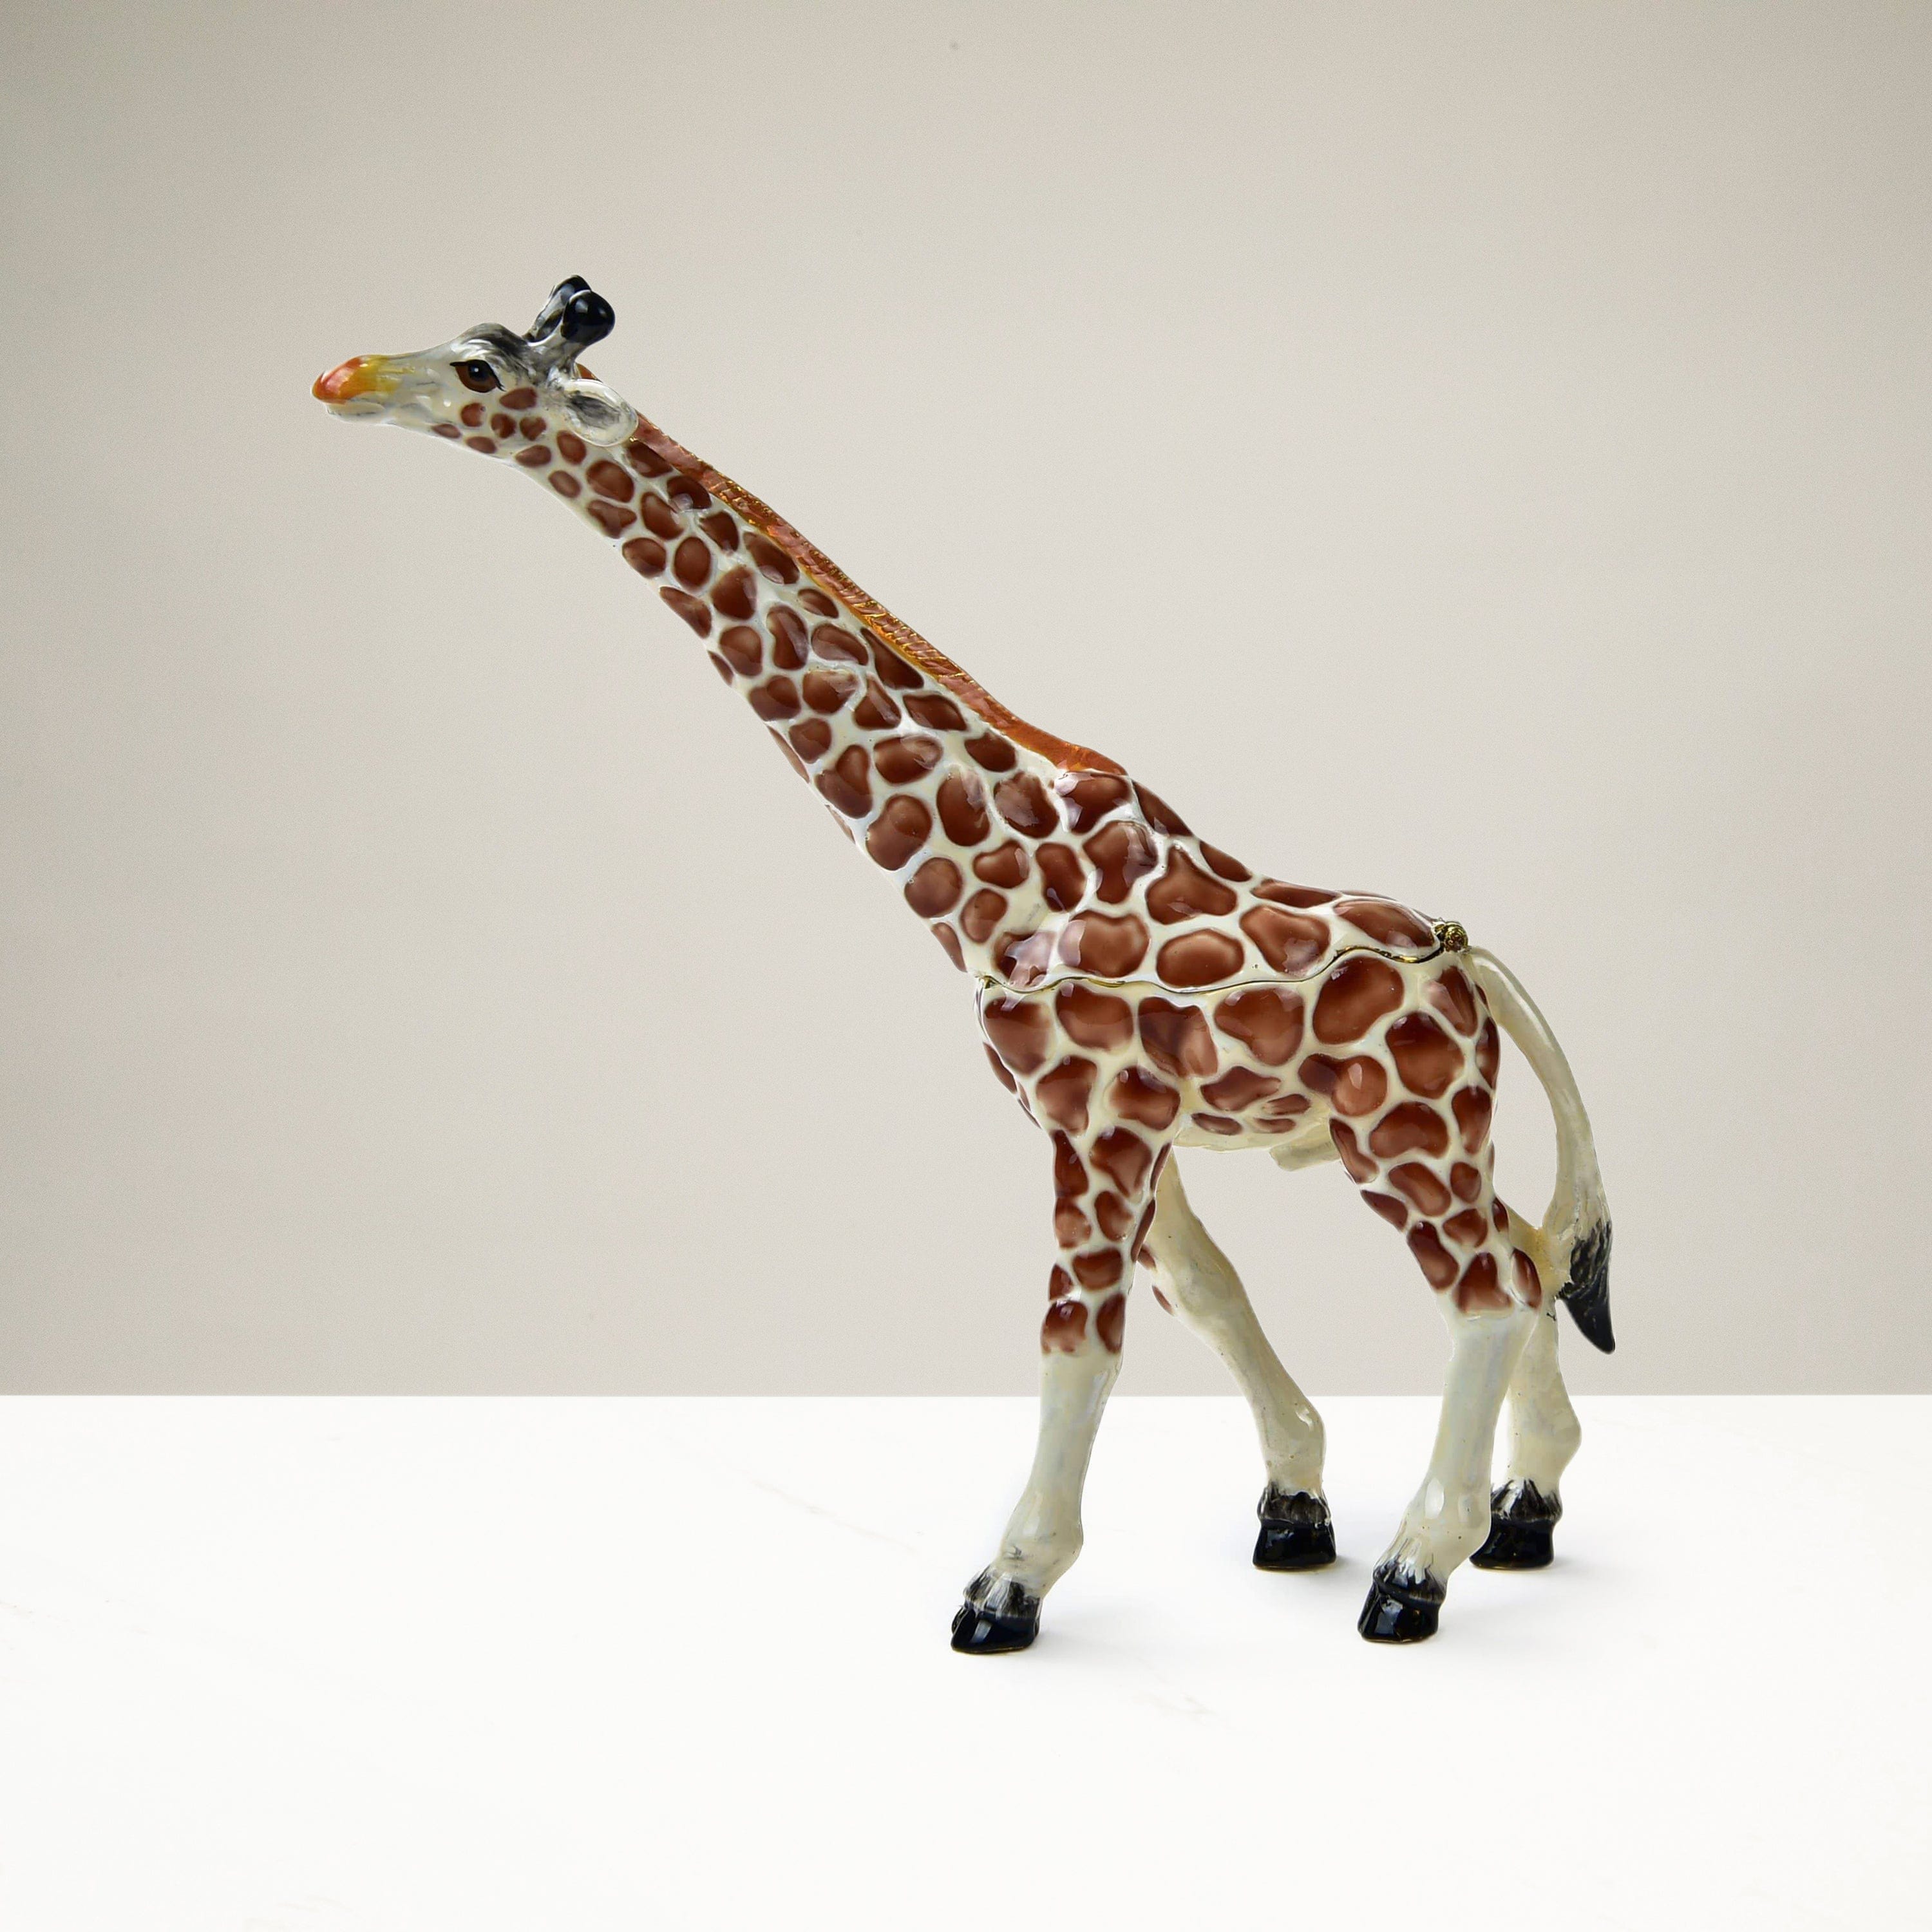 Kalifano Vanity Figurine Giraffe Figurine Keepsake Box made with Crystals SVA-085